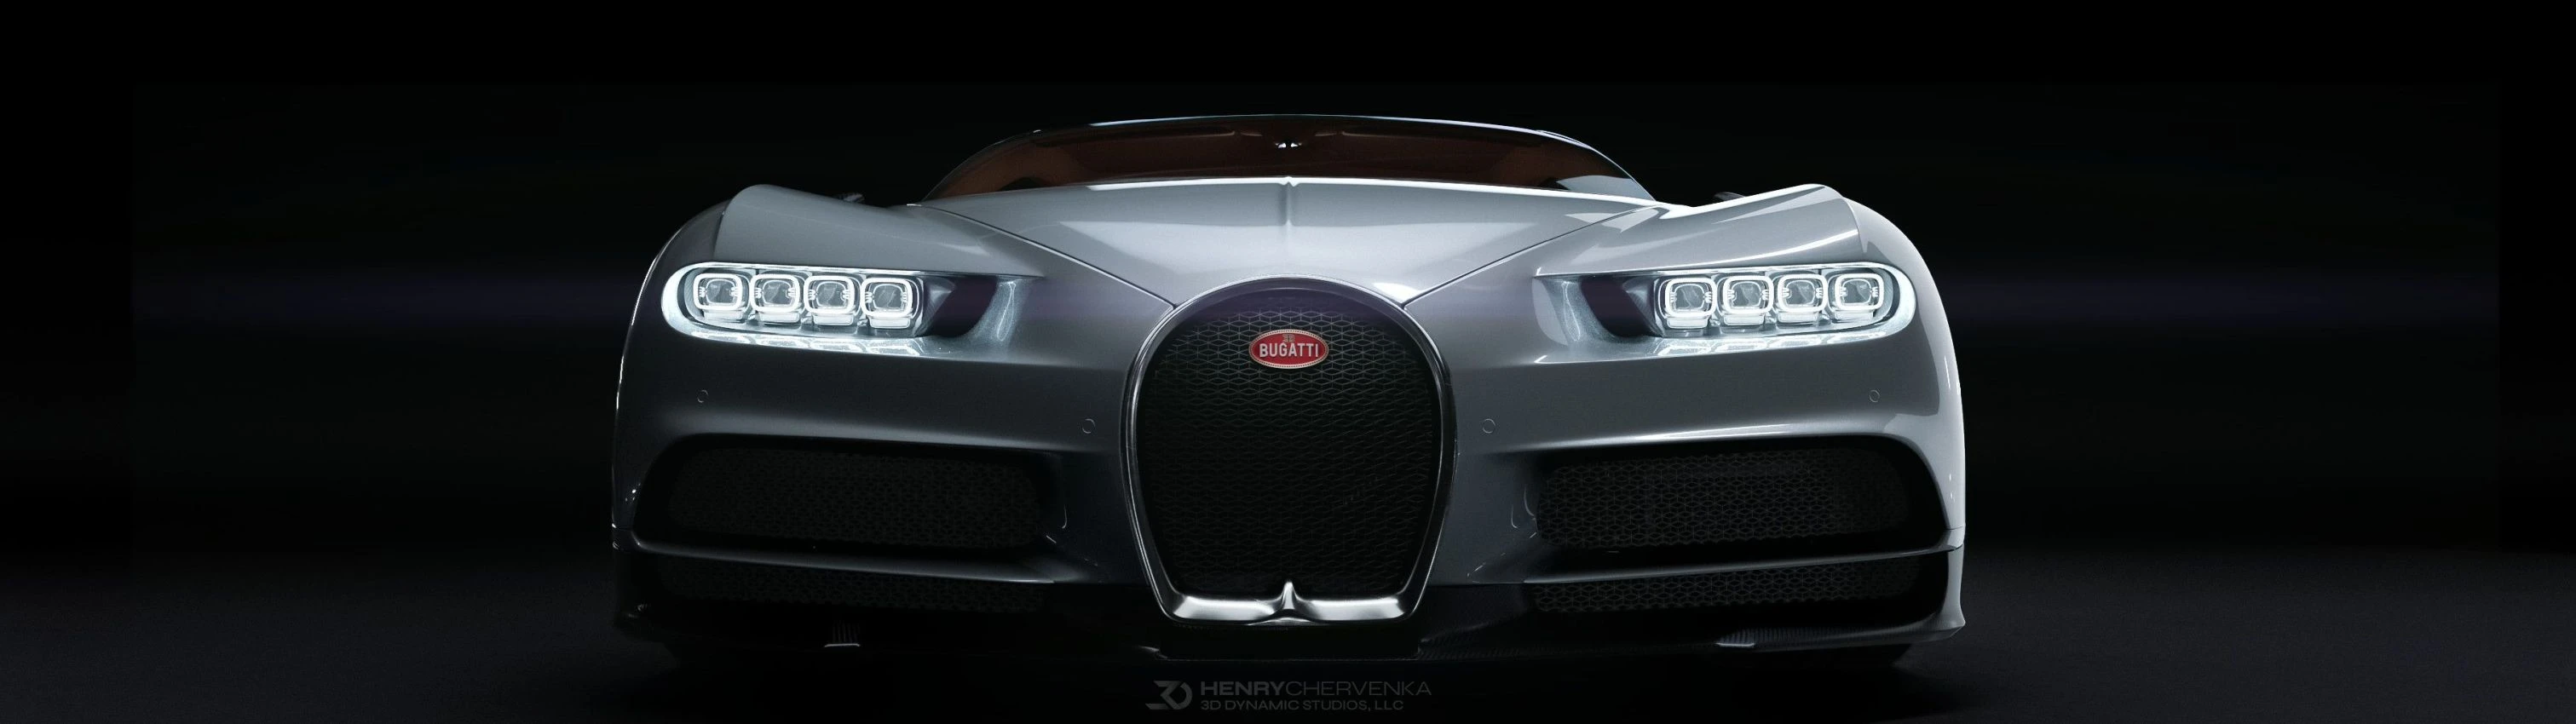 Bugatti Chiron by Henry Chervenka and Kasita 3d model front view render